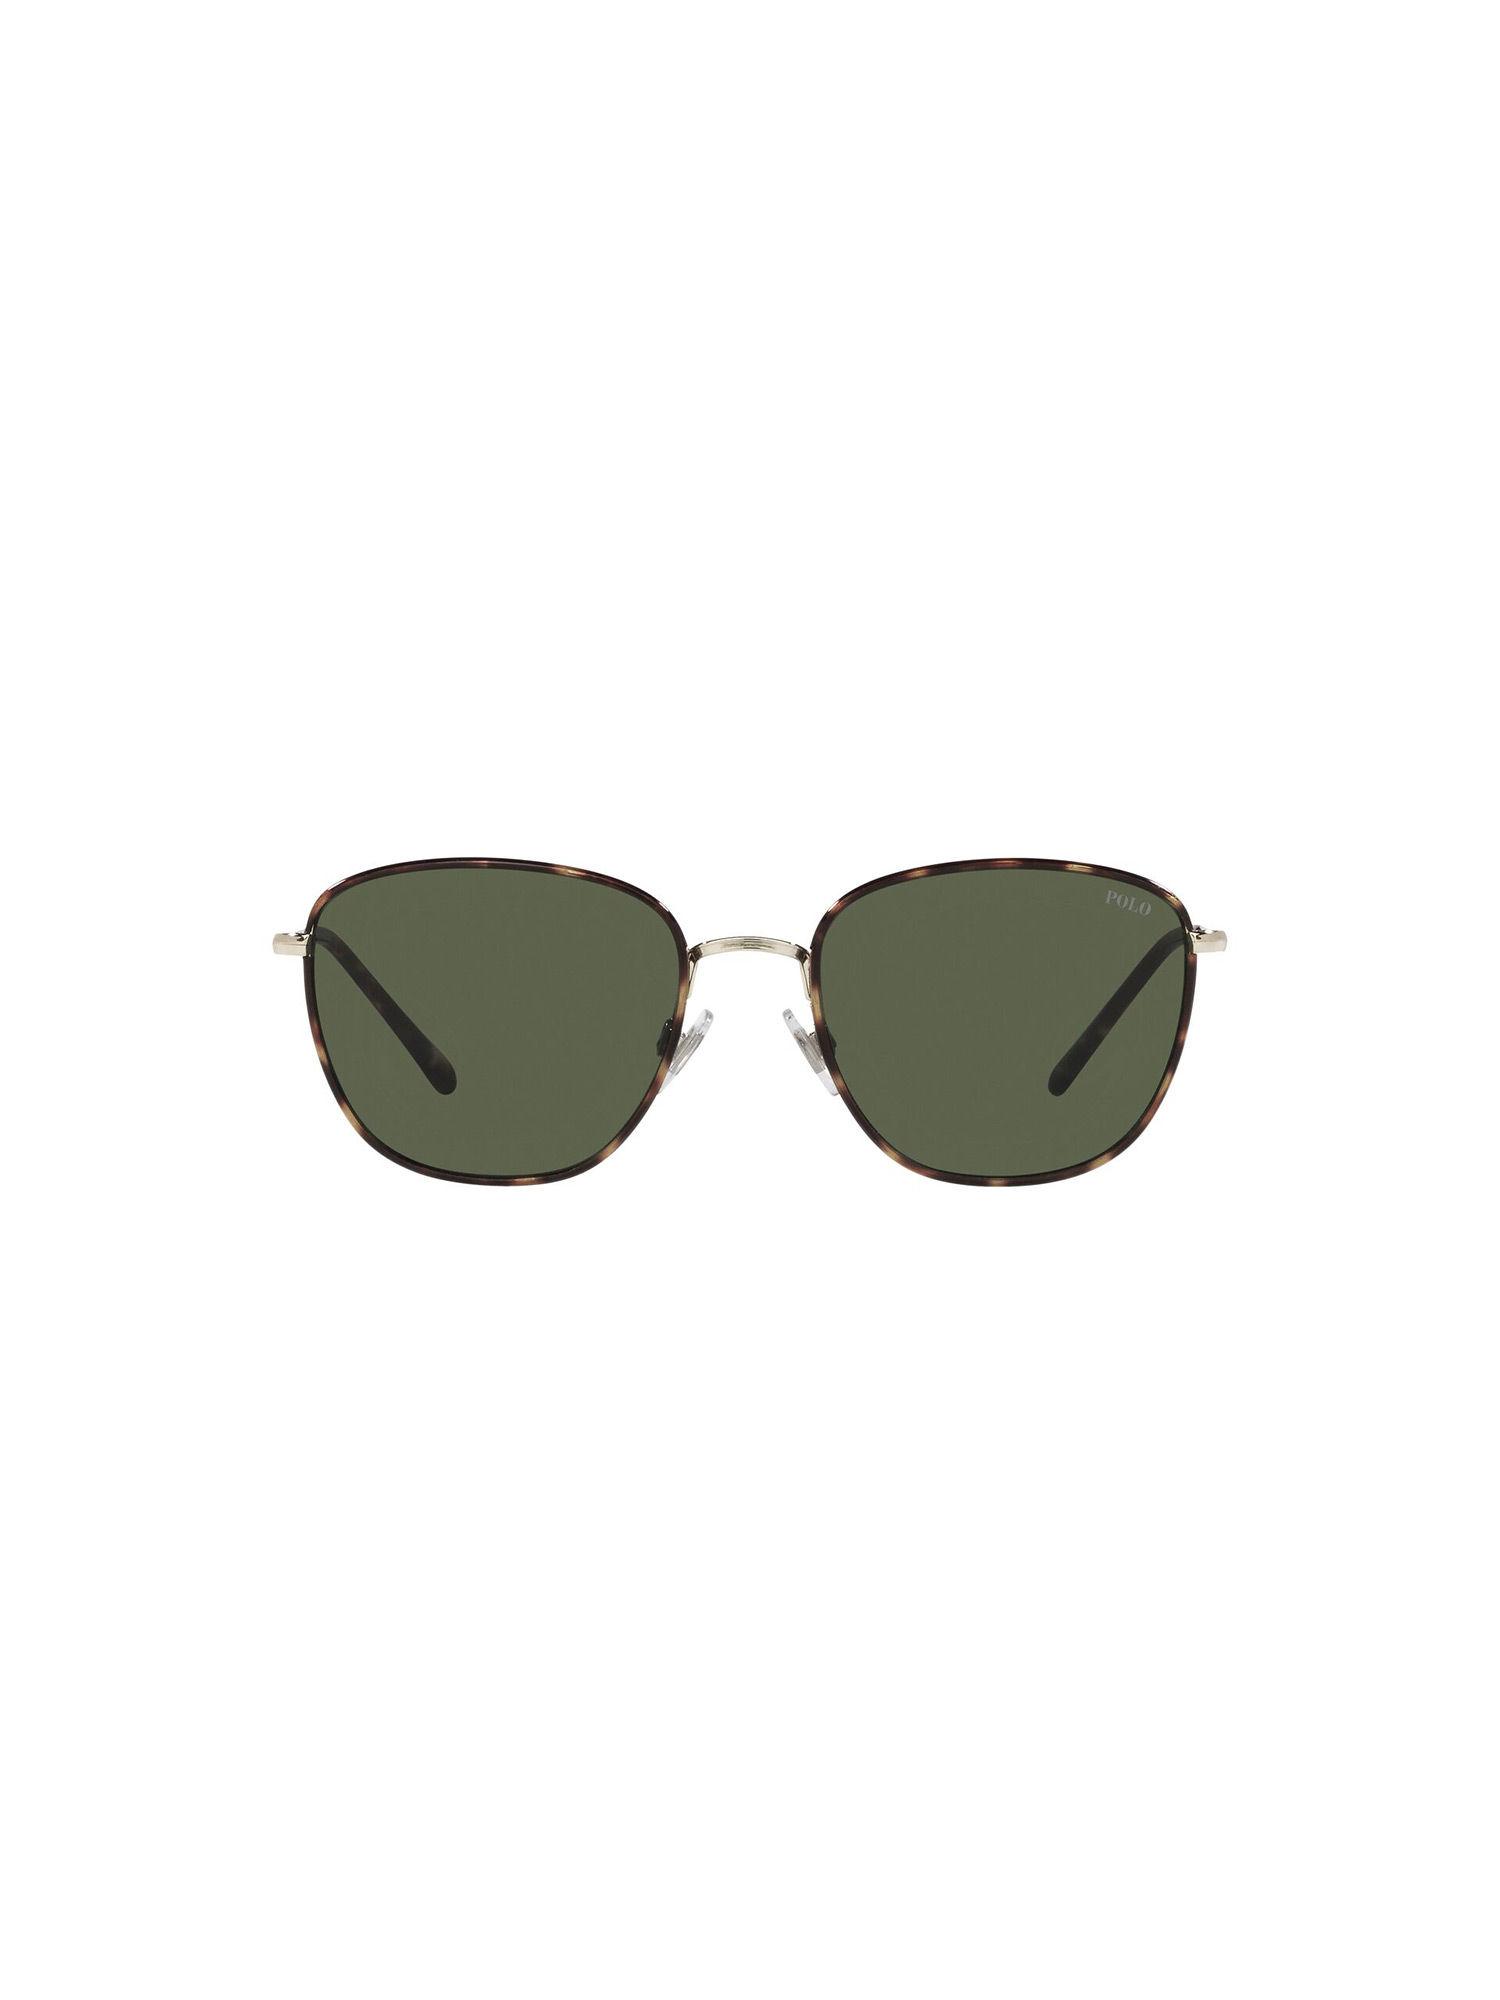 0ph3134 polo thin metal temple bottle green lens pillow male sunglasses